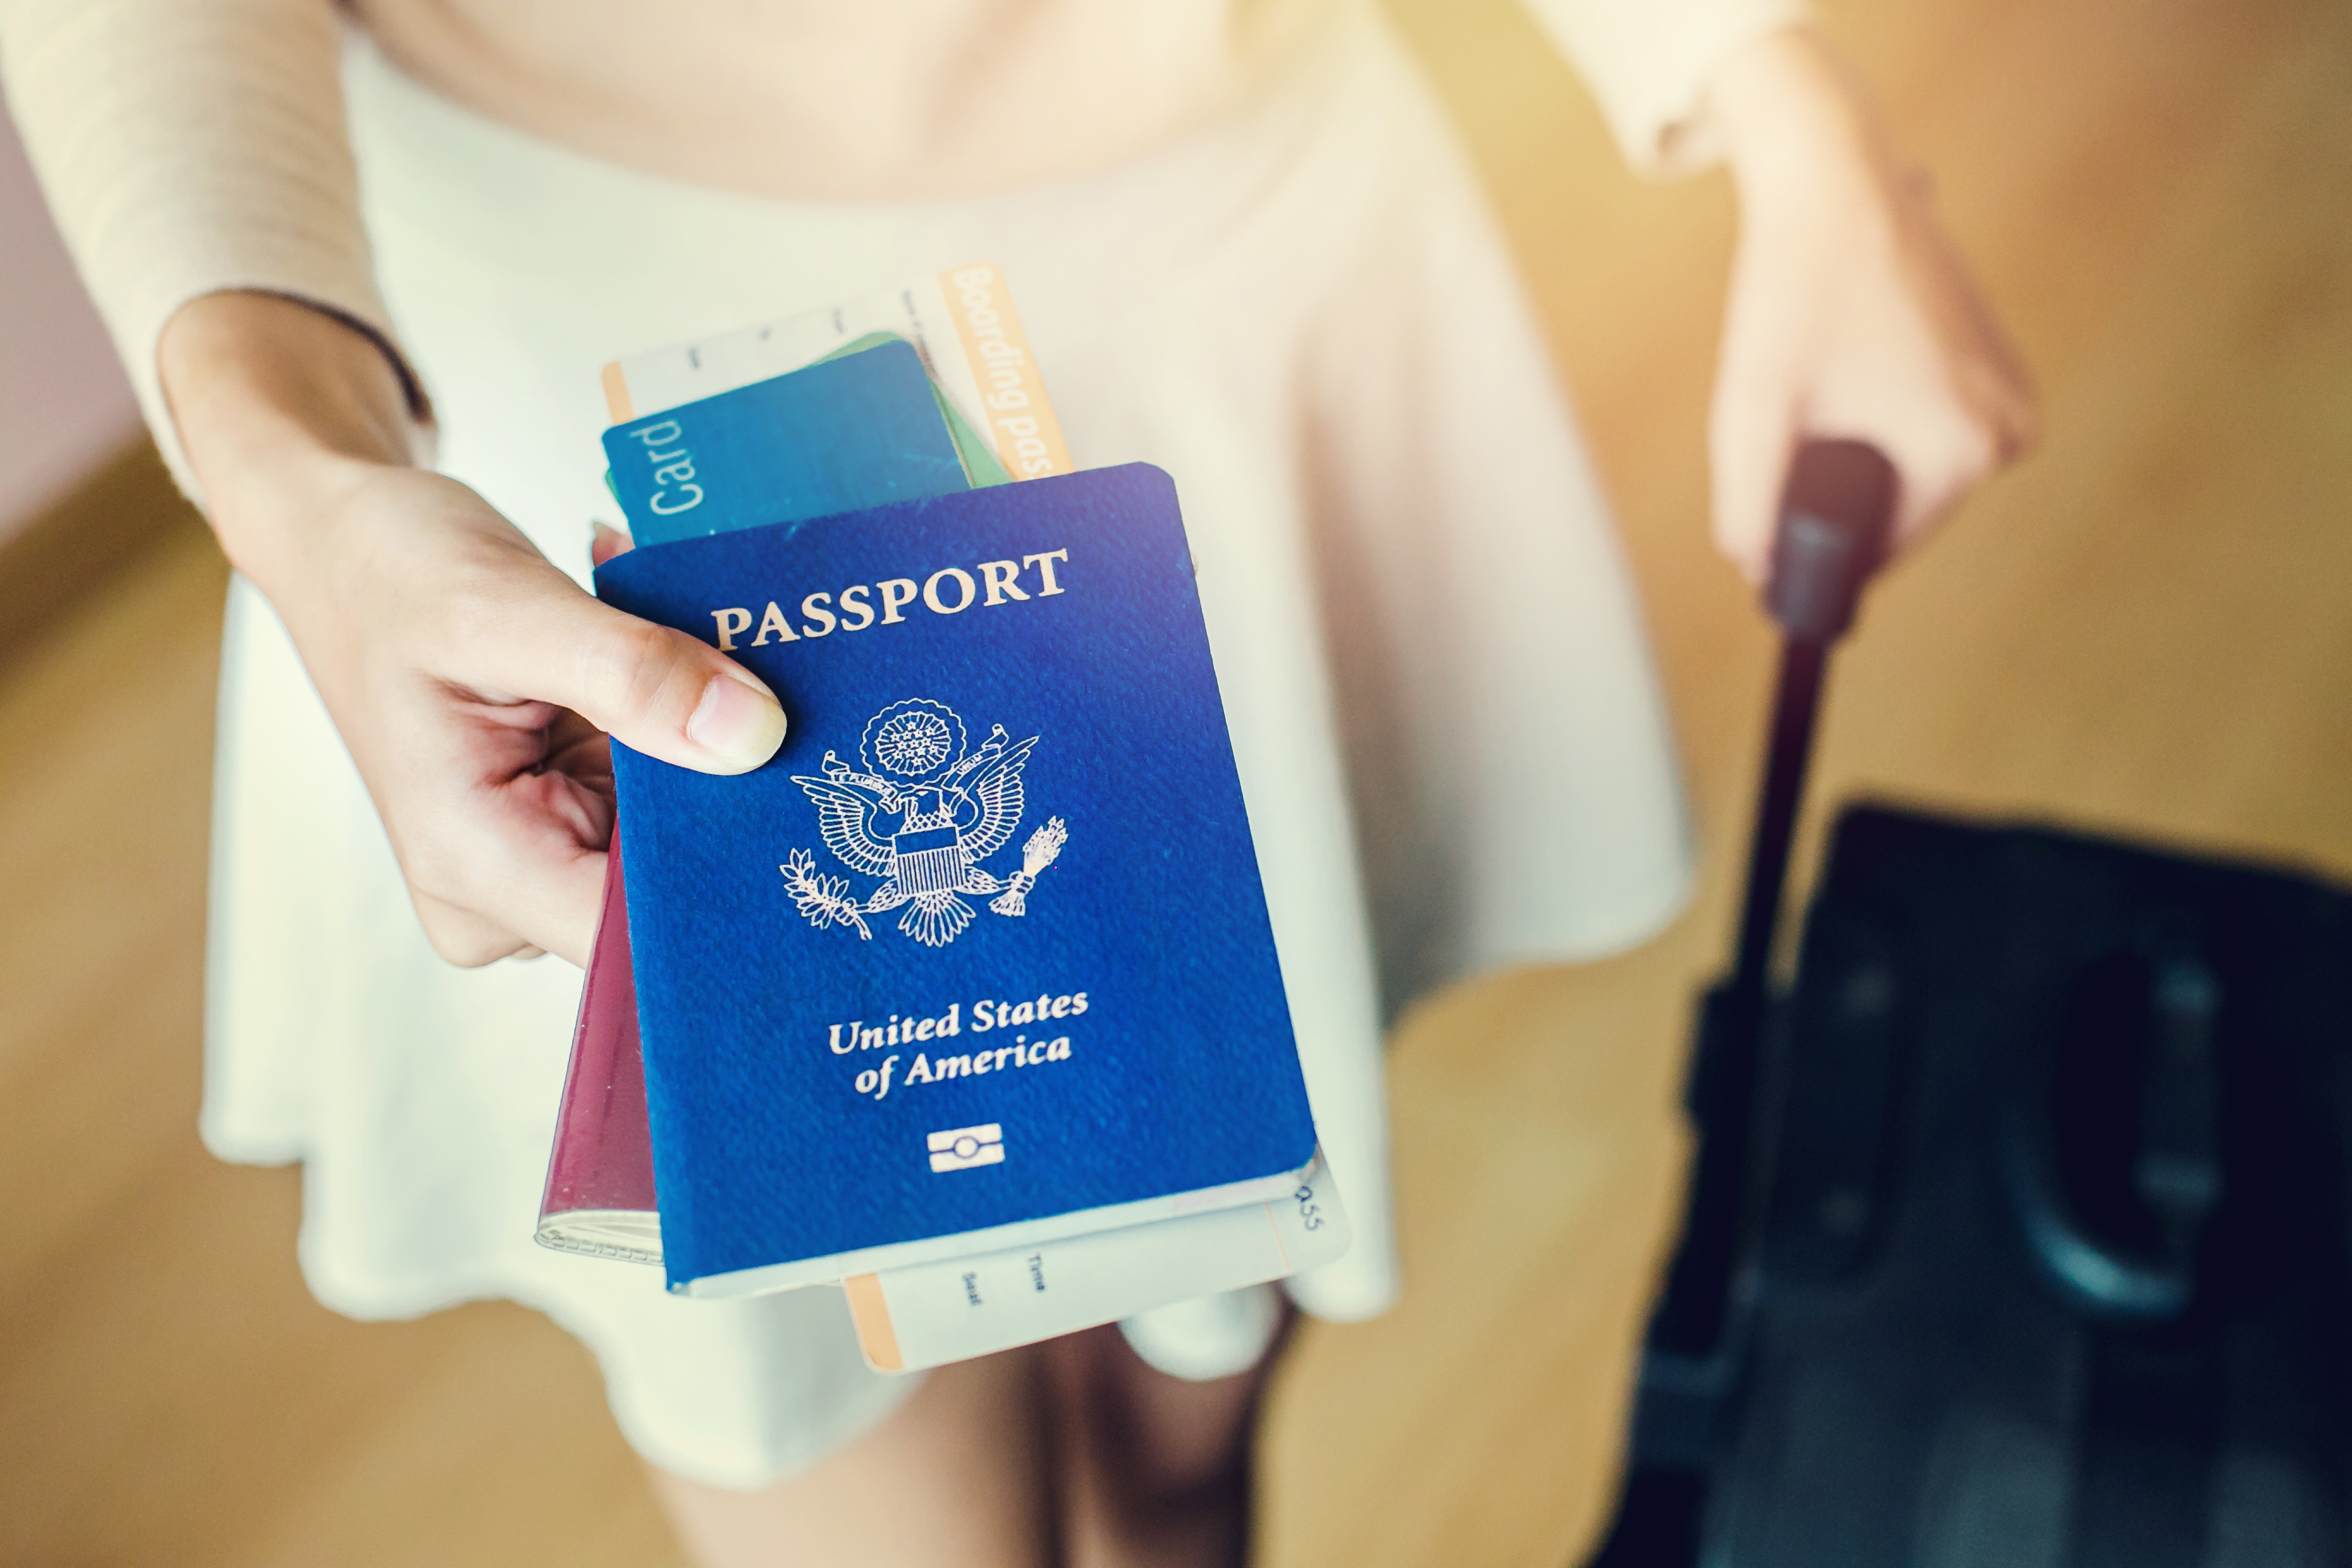 Une fille tenant un passeport et une carte d'embarquement | Source : Shutterstock